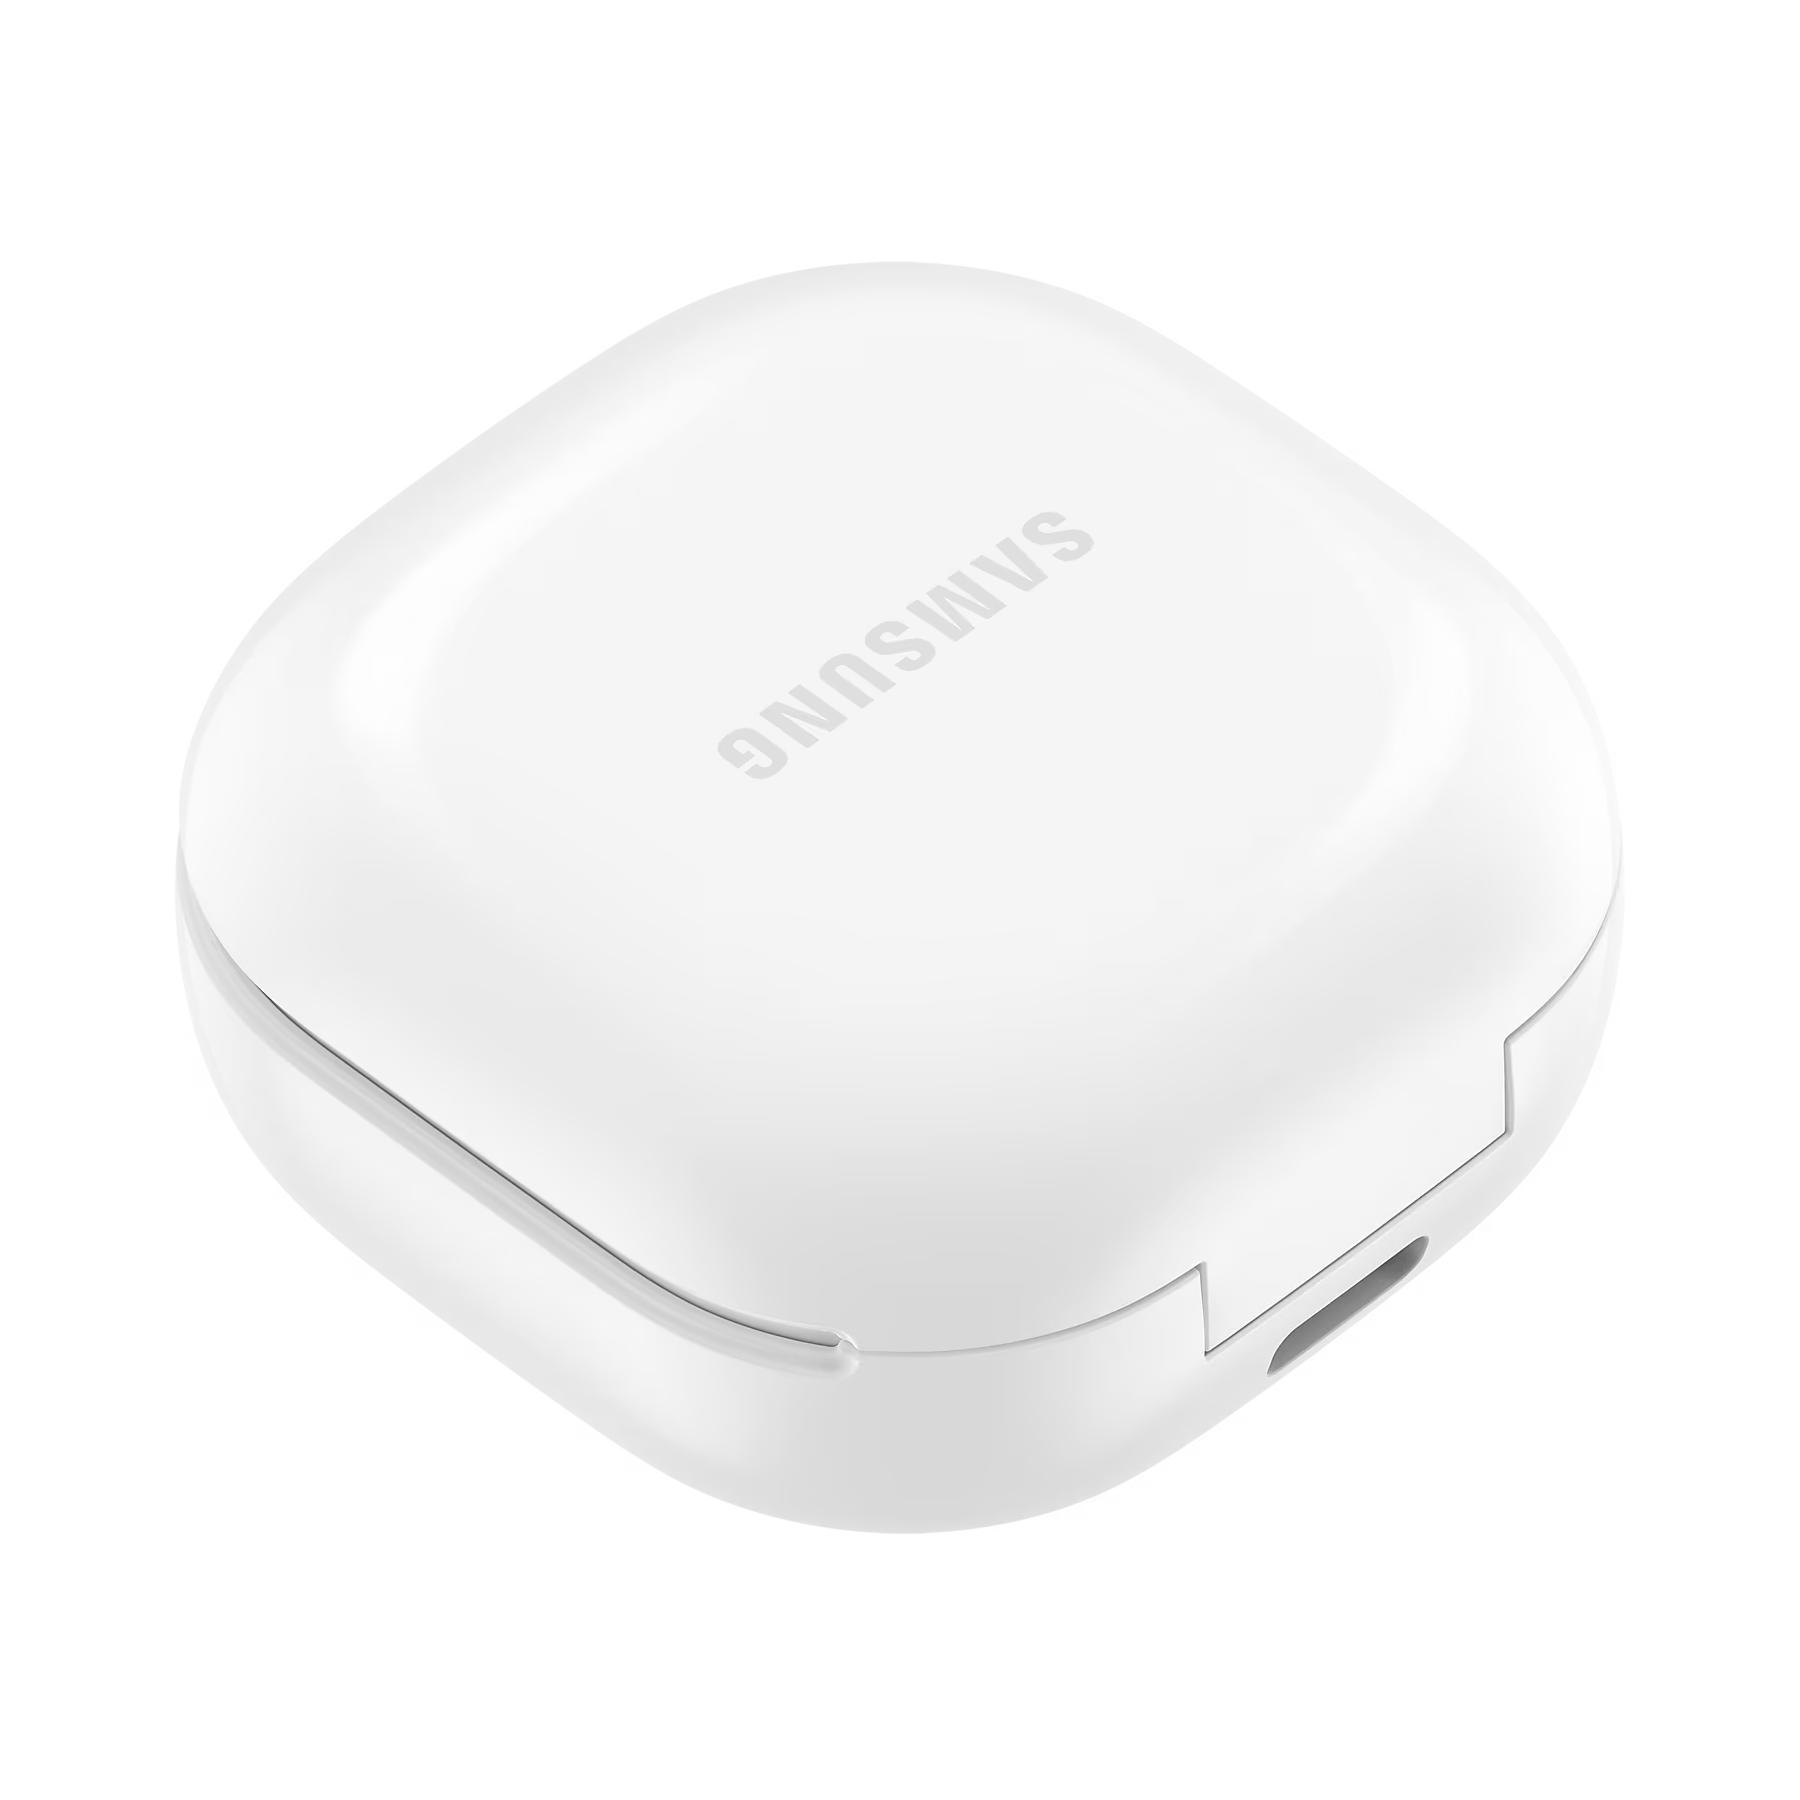 Samsung Galaxy Buds Белые Купить